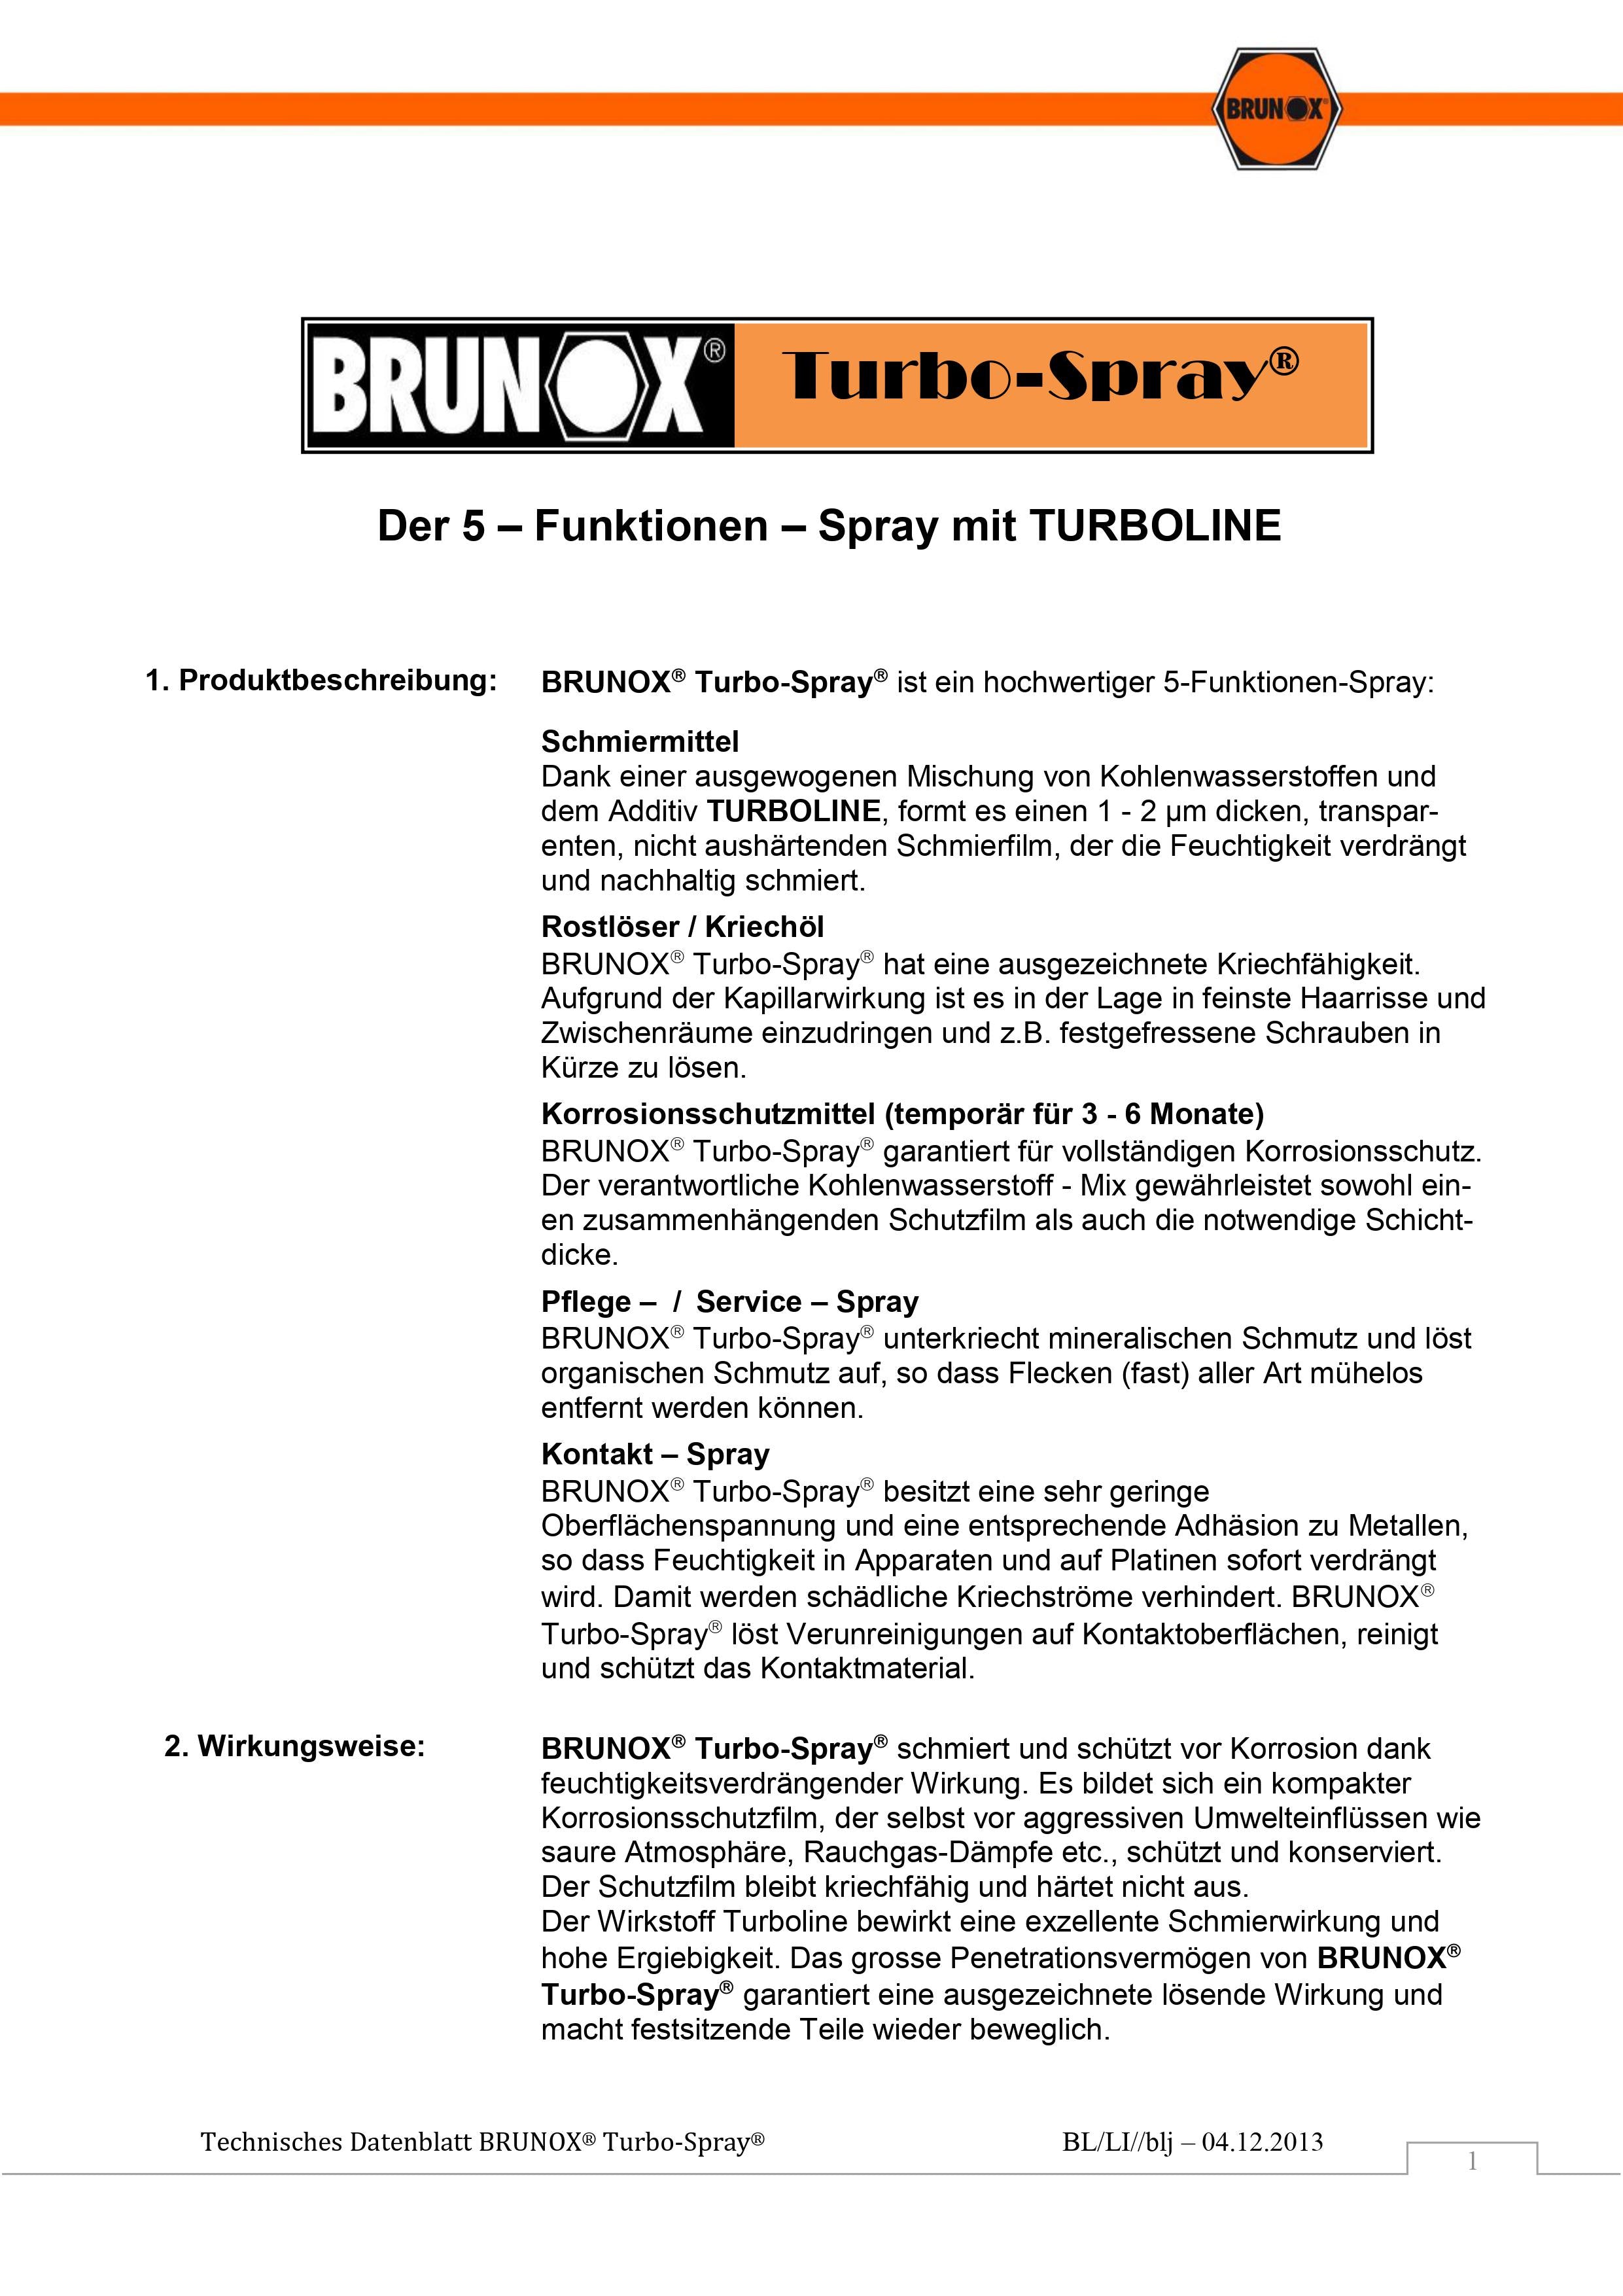 BRUNOX Turbo-Spray 300 ml Multifunktionsöl, Rostlöser, Kriechöl Schmiermittel